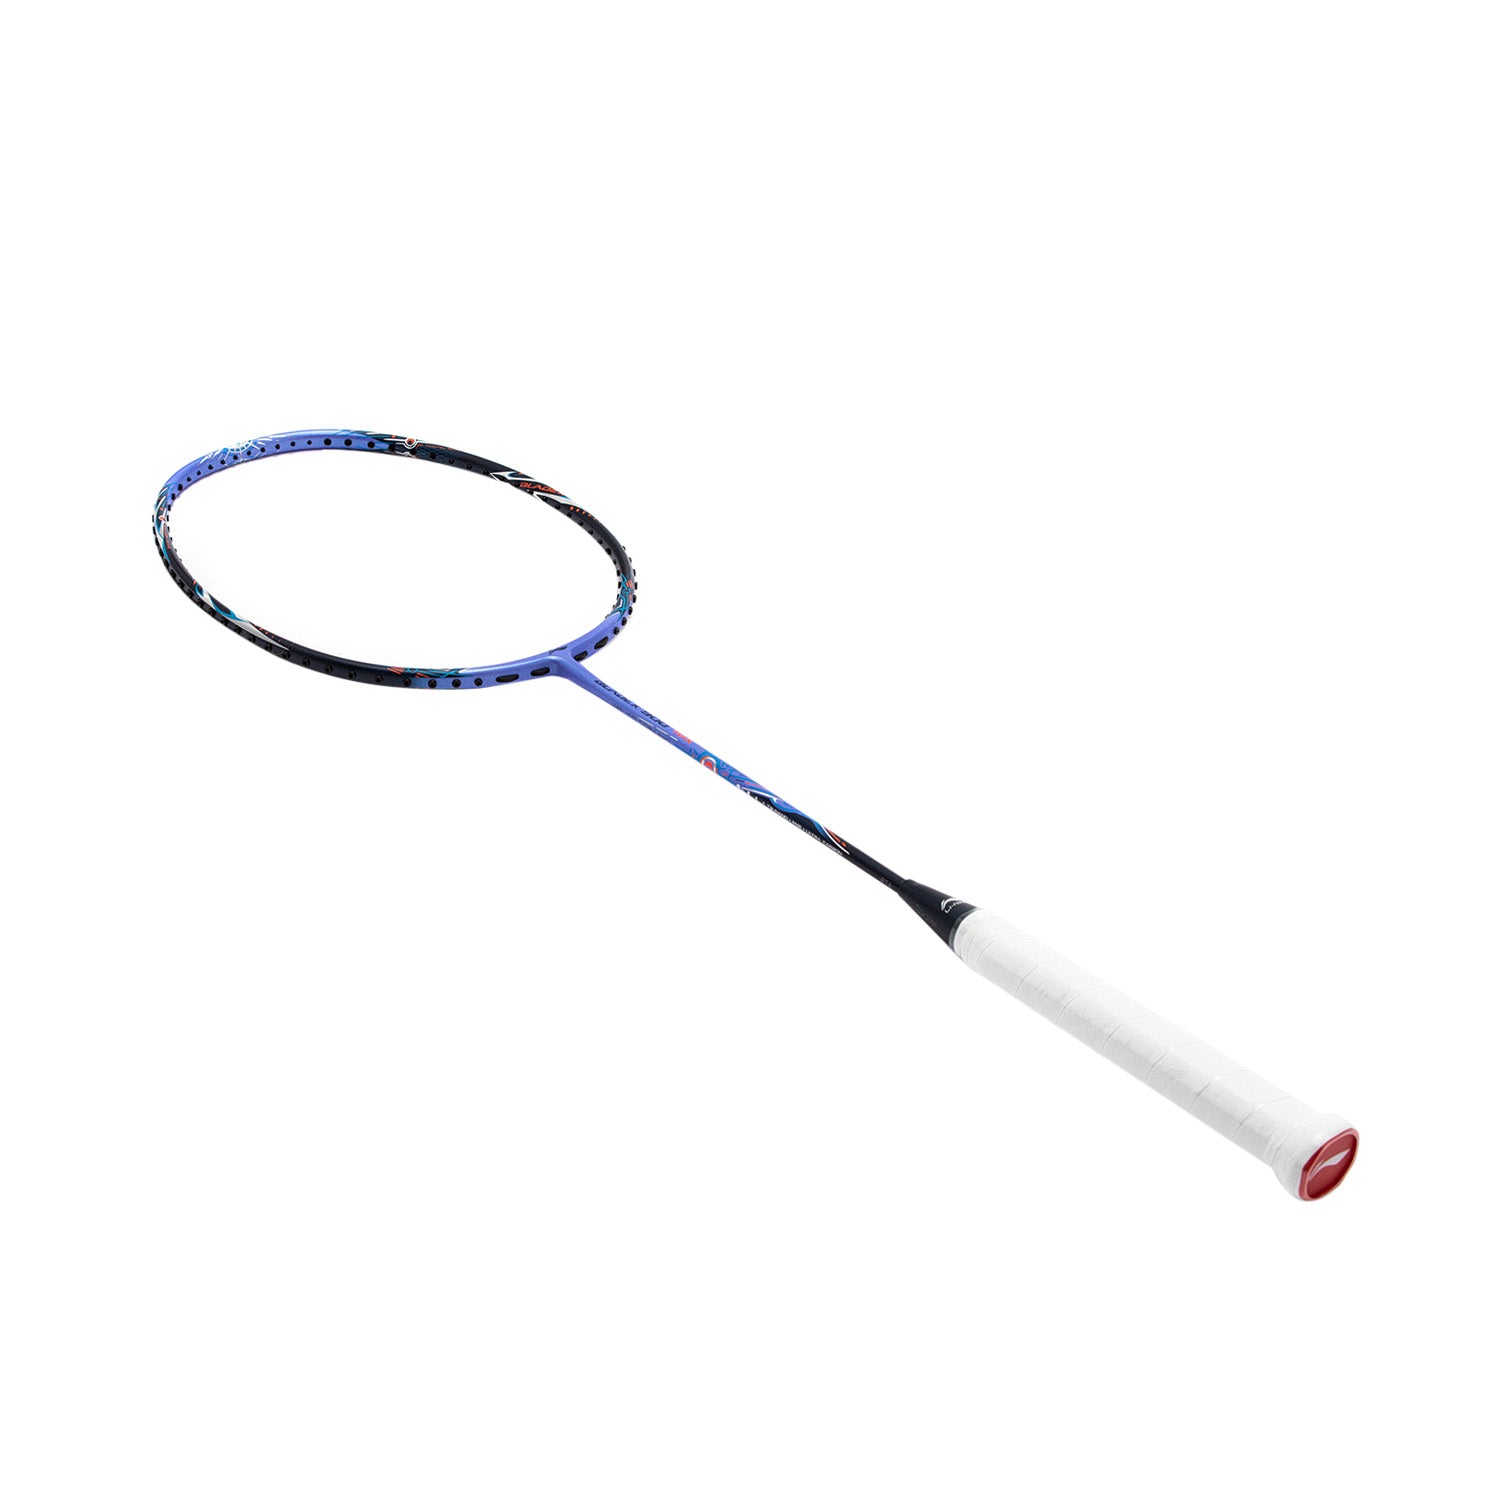 Li-Ning BladeX 900 Max Moon Badminton Racket (Blue)